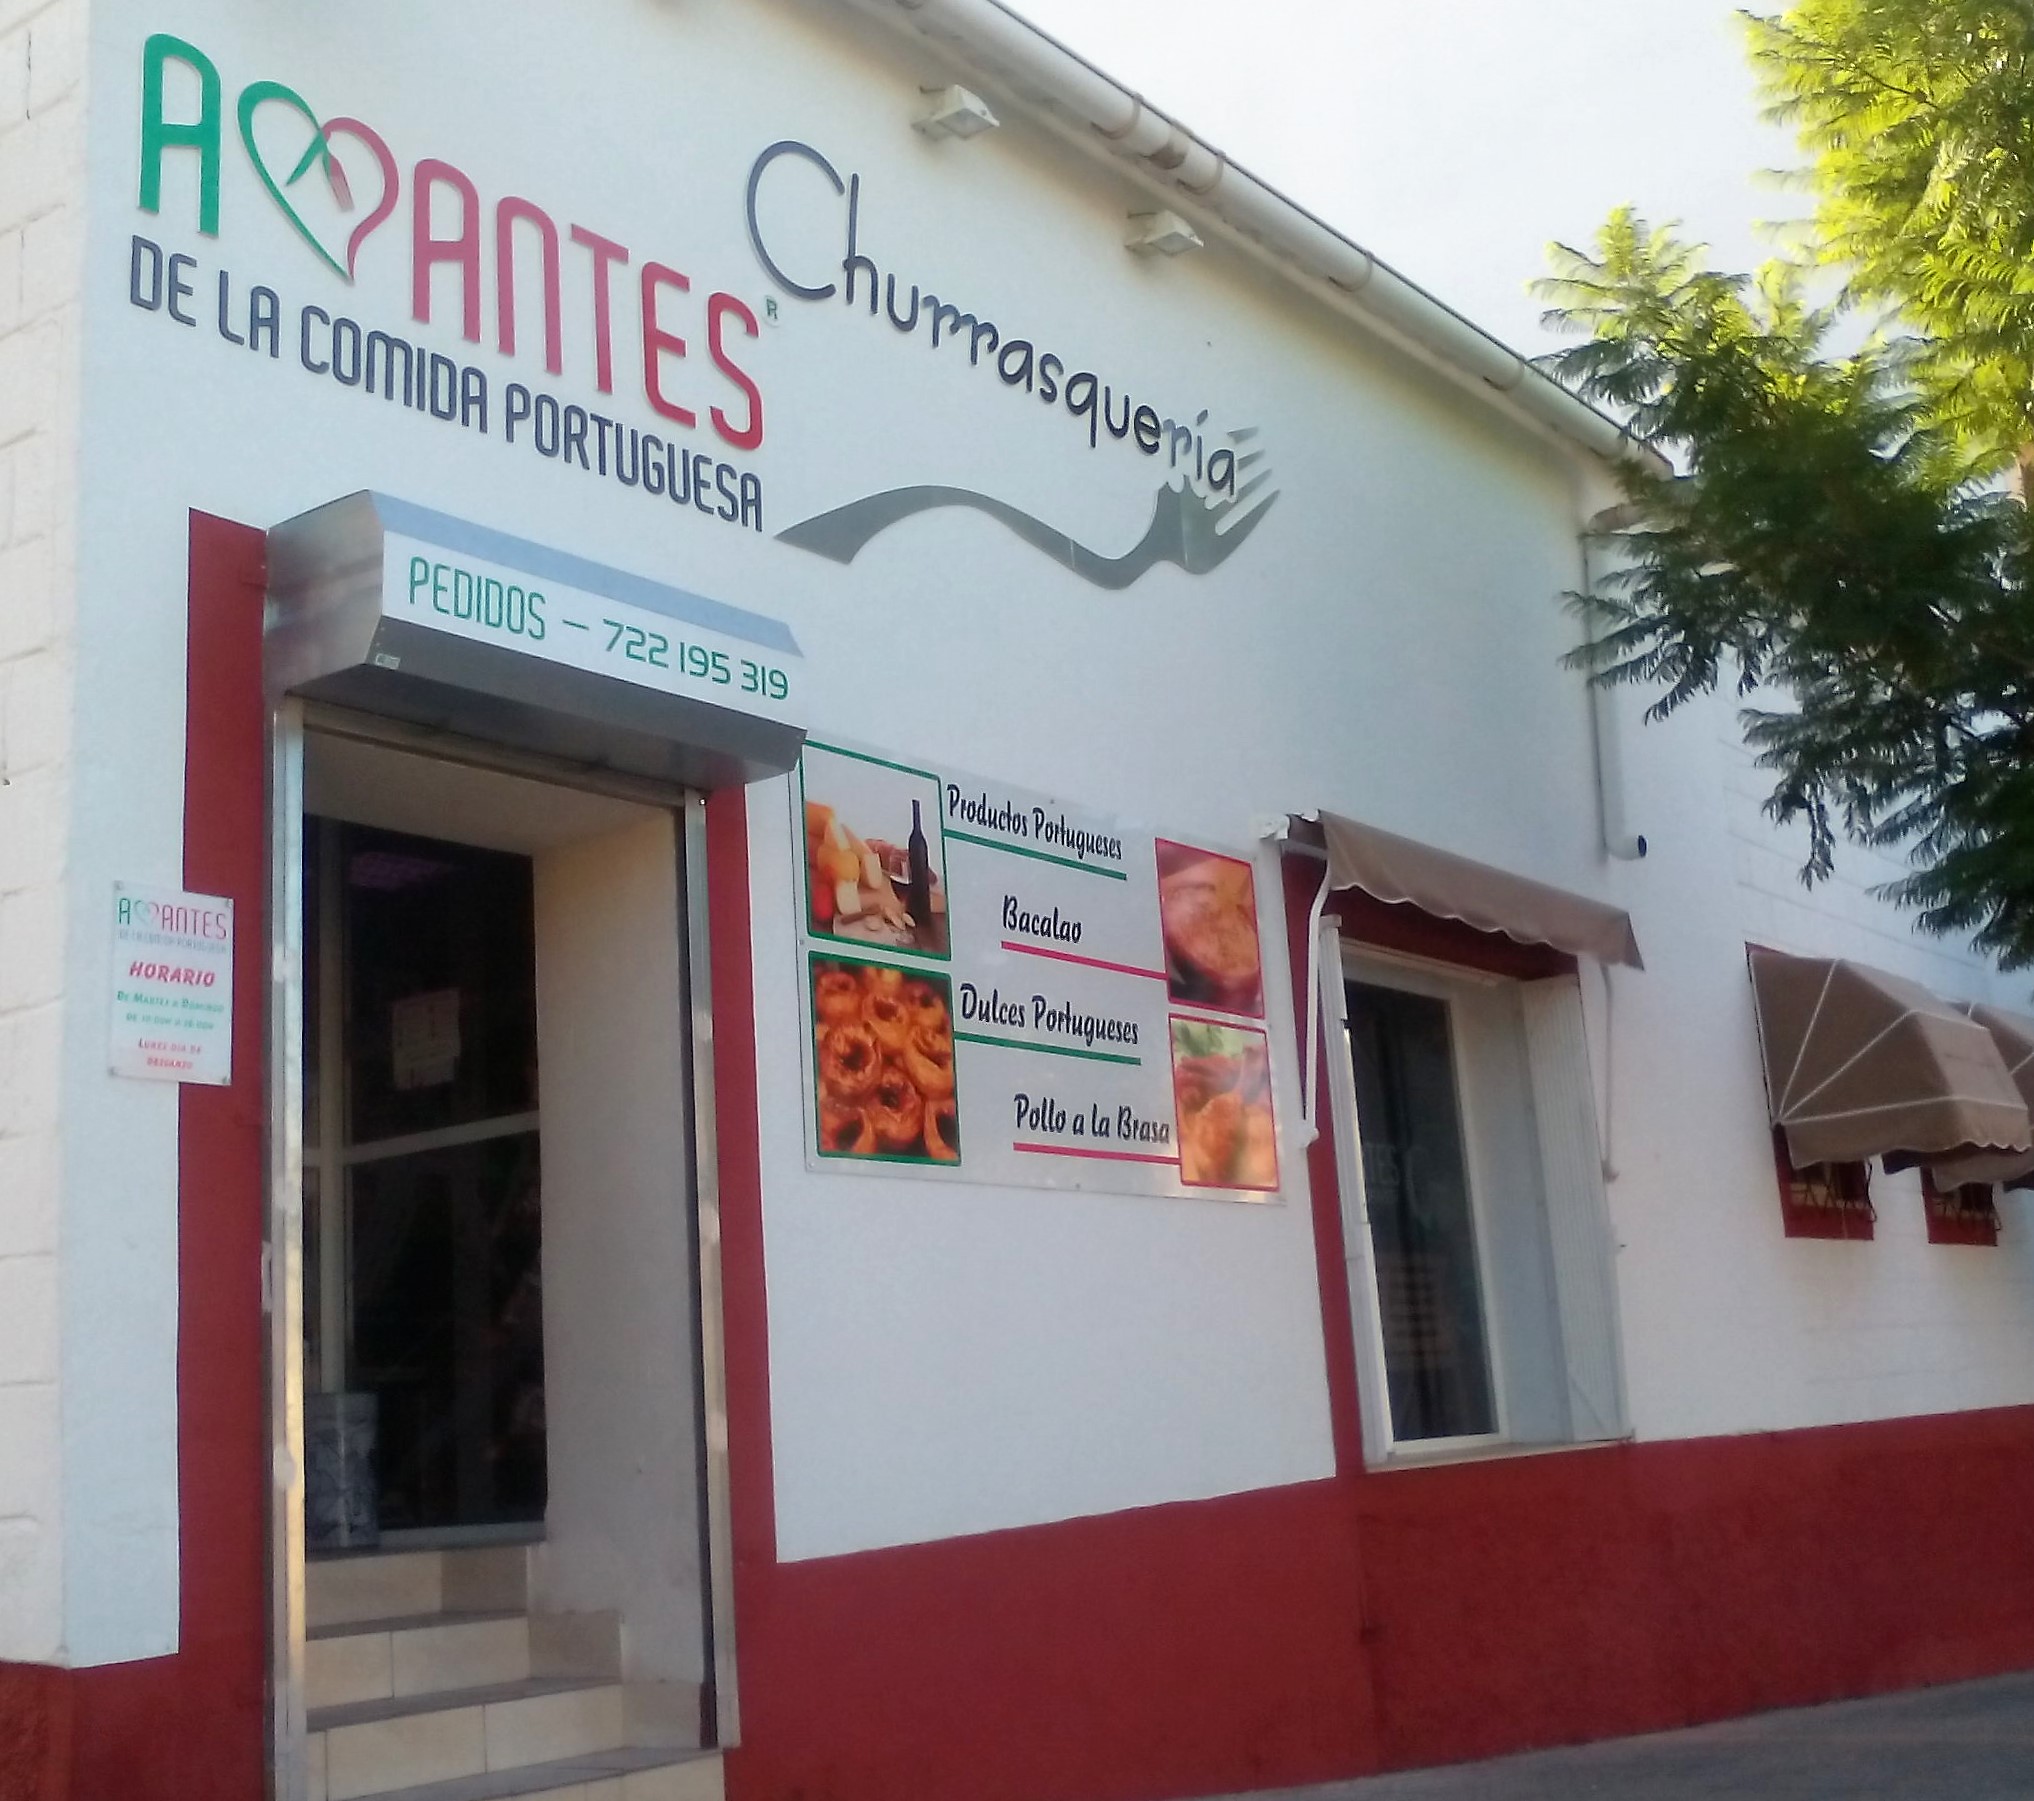 españa pollos portugueses merida - amantes de la comida portuguesa